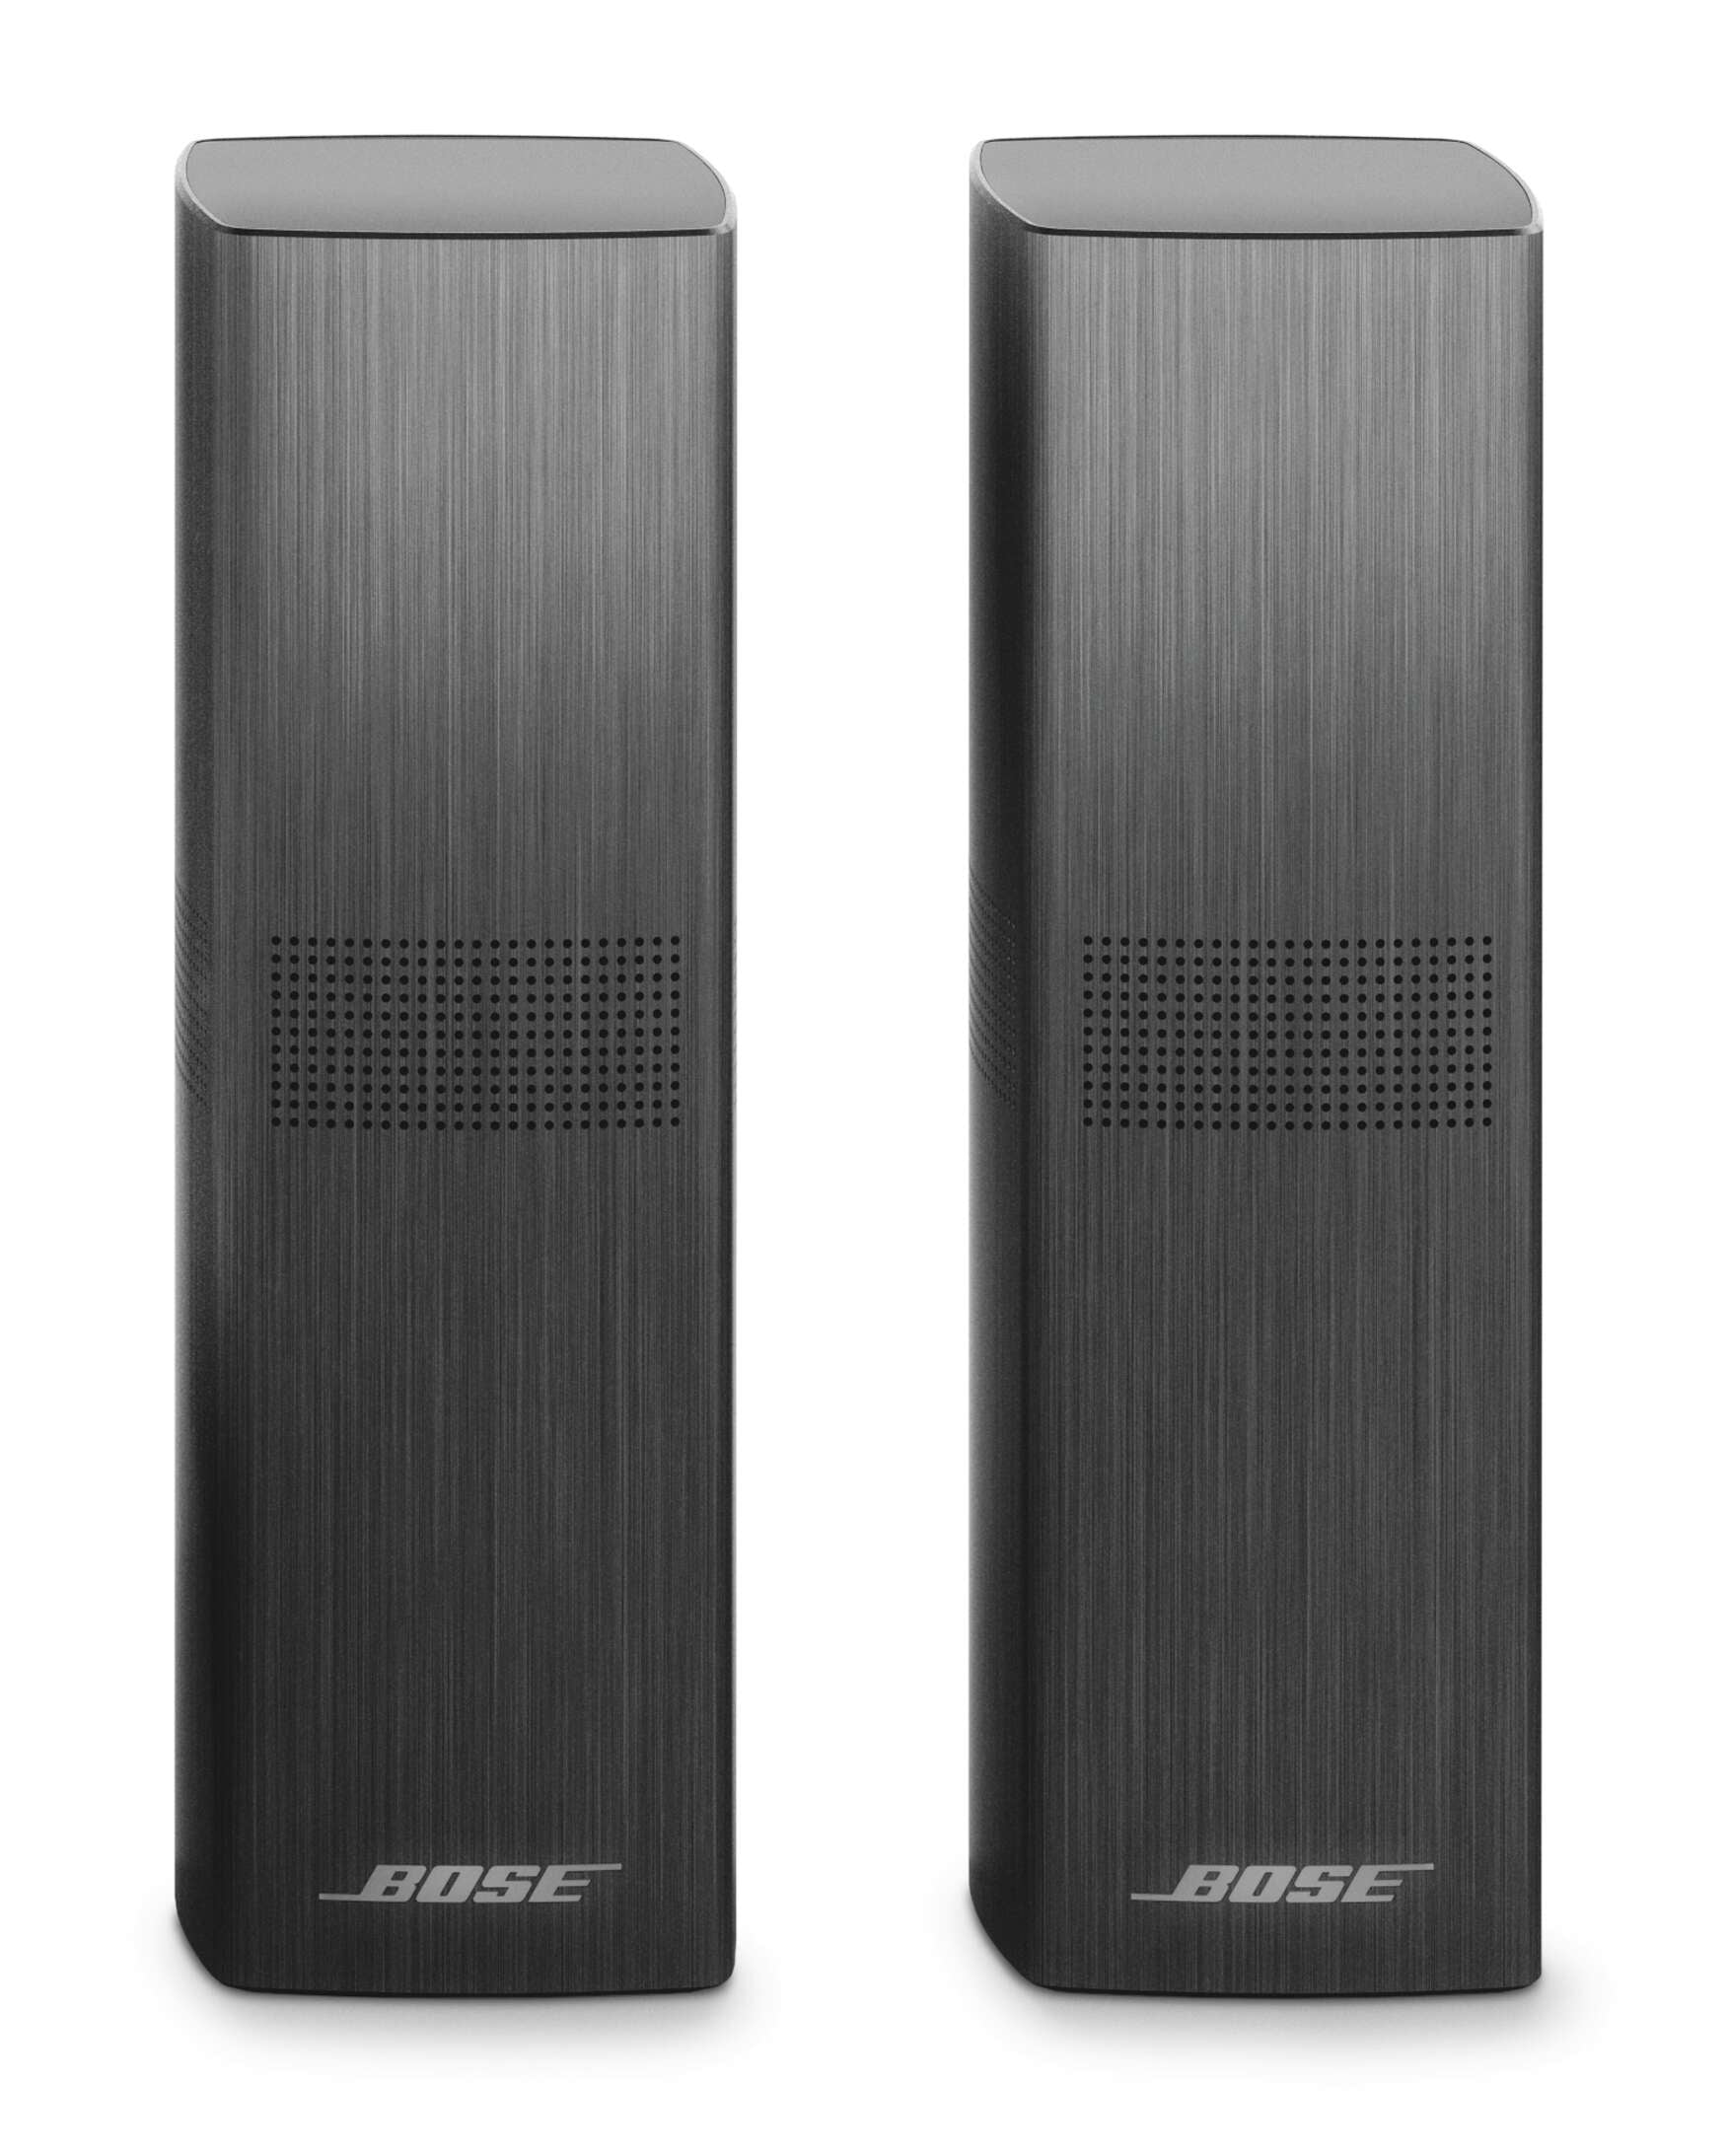 Bose Surround Black Sound Speakers Bose Soundbars, for 700